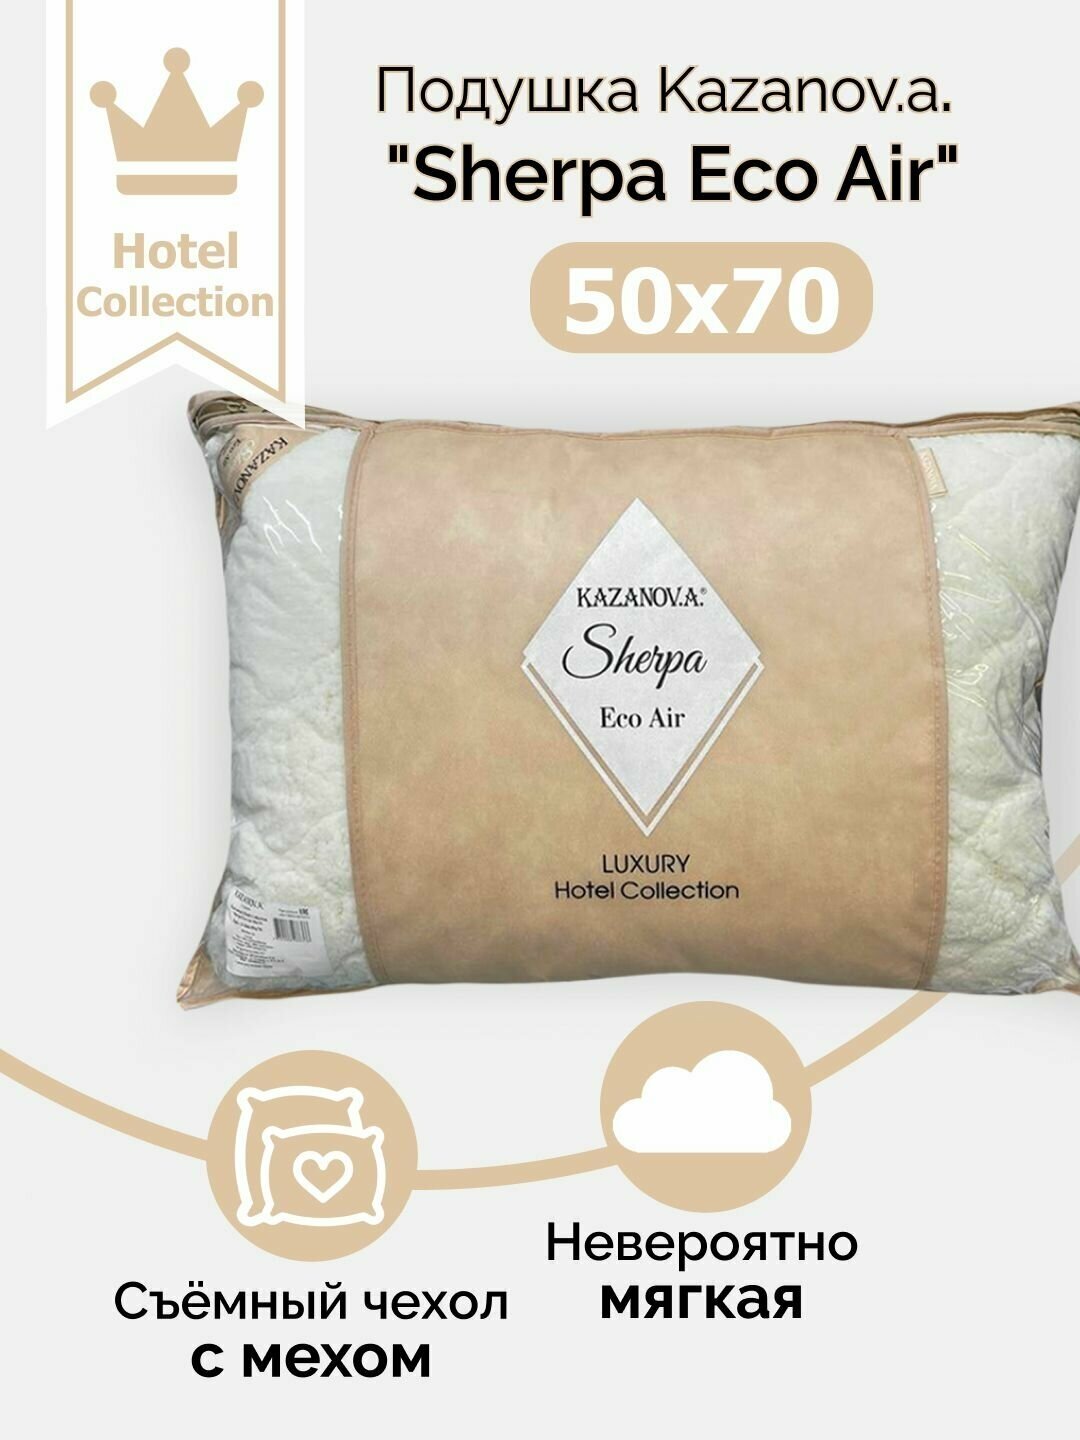 Подушка KAZANOV.A Luxury Hotel Collection "Sherpa Eco Air", 50х70 - фотография № 1